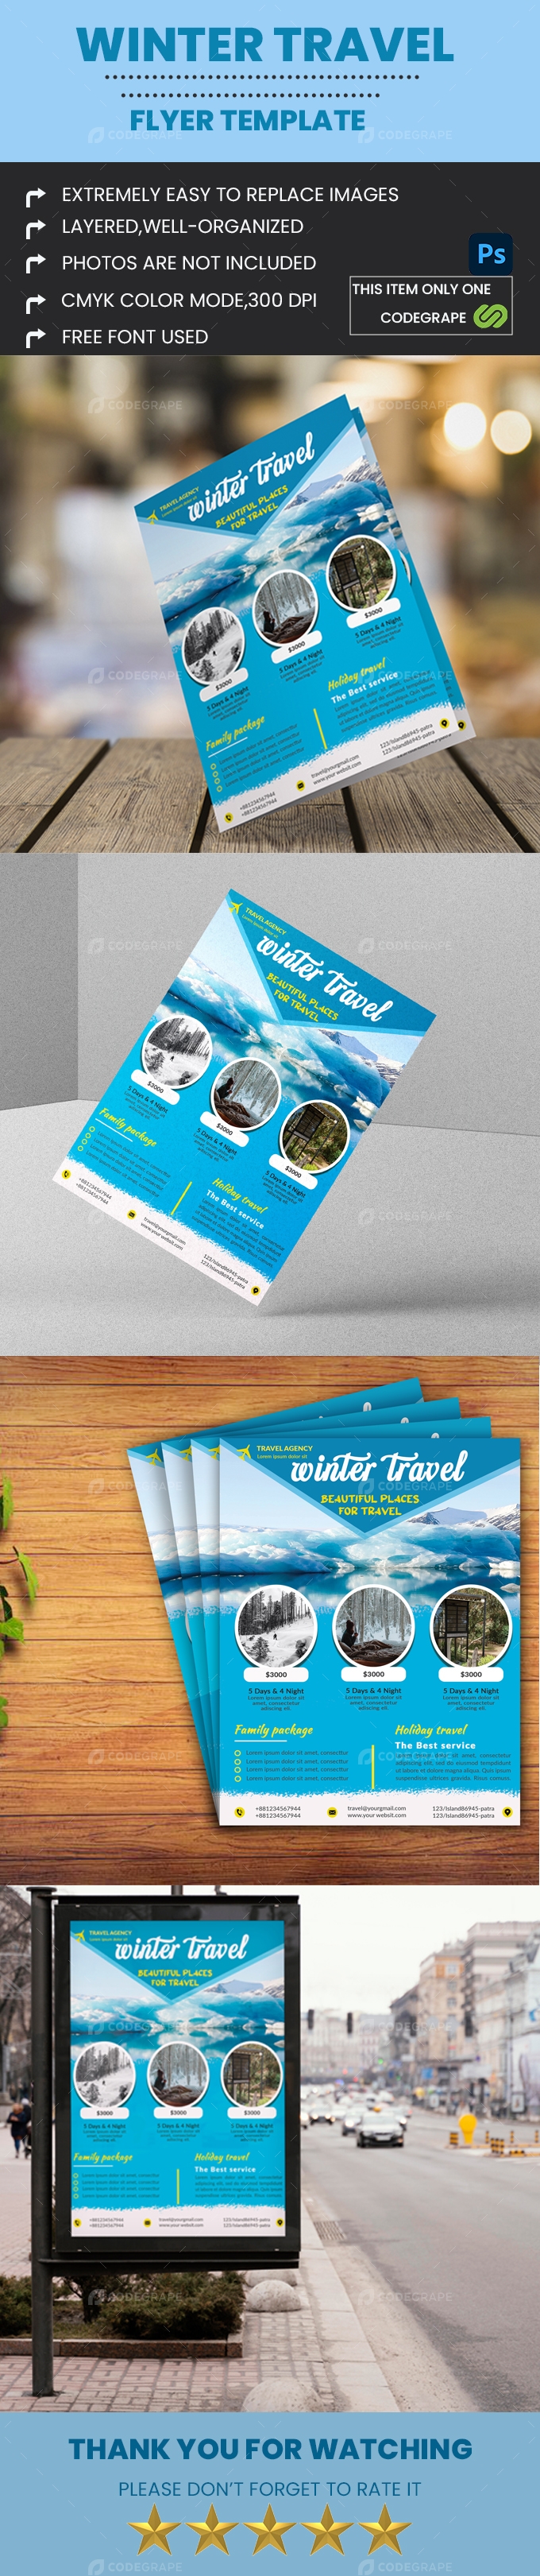 Winter Travel Flyer